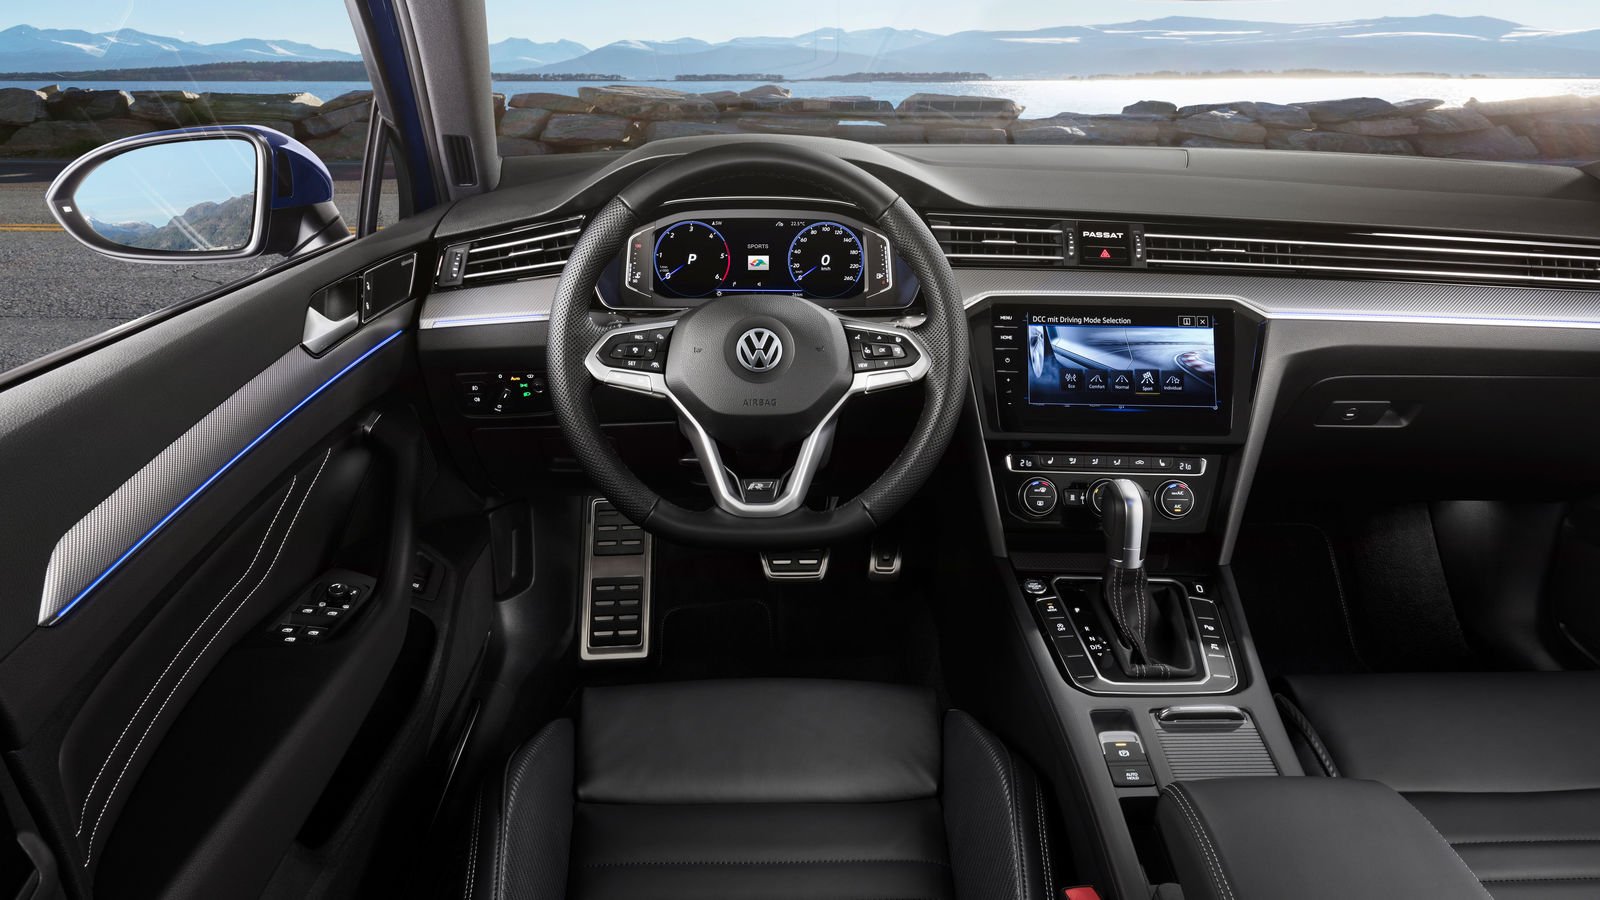 Volkswagen Passat interior - Cockpit